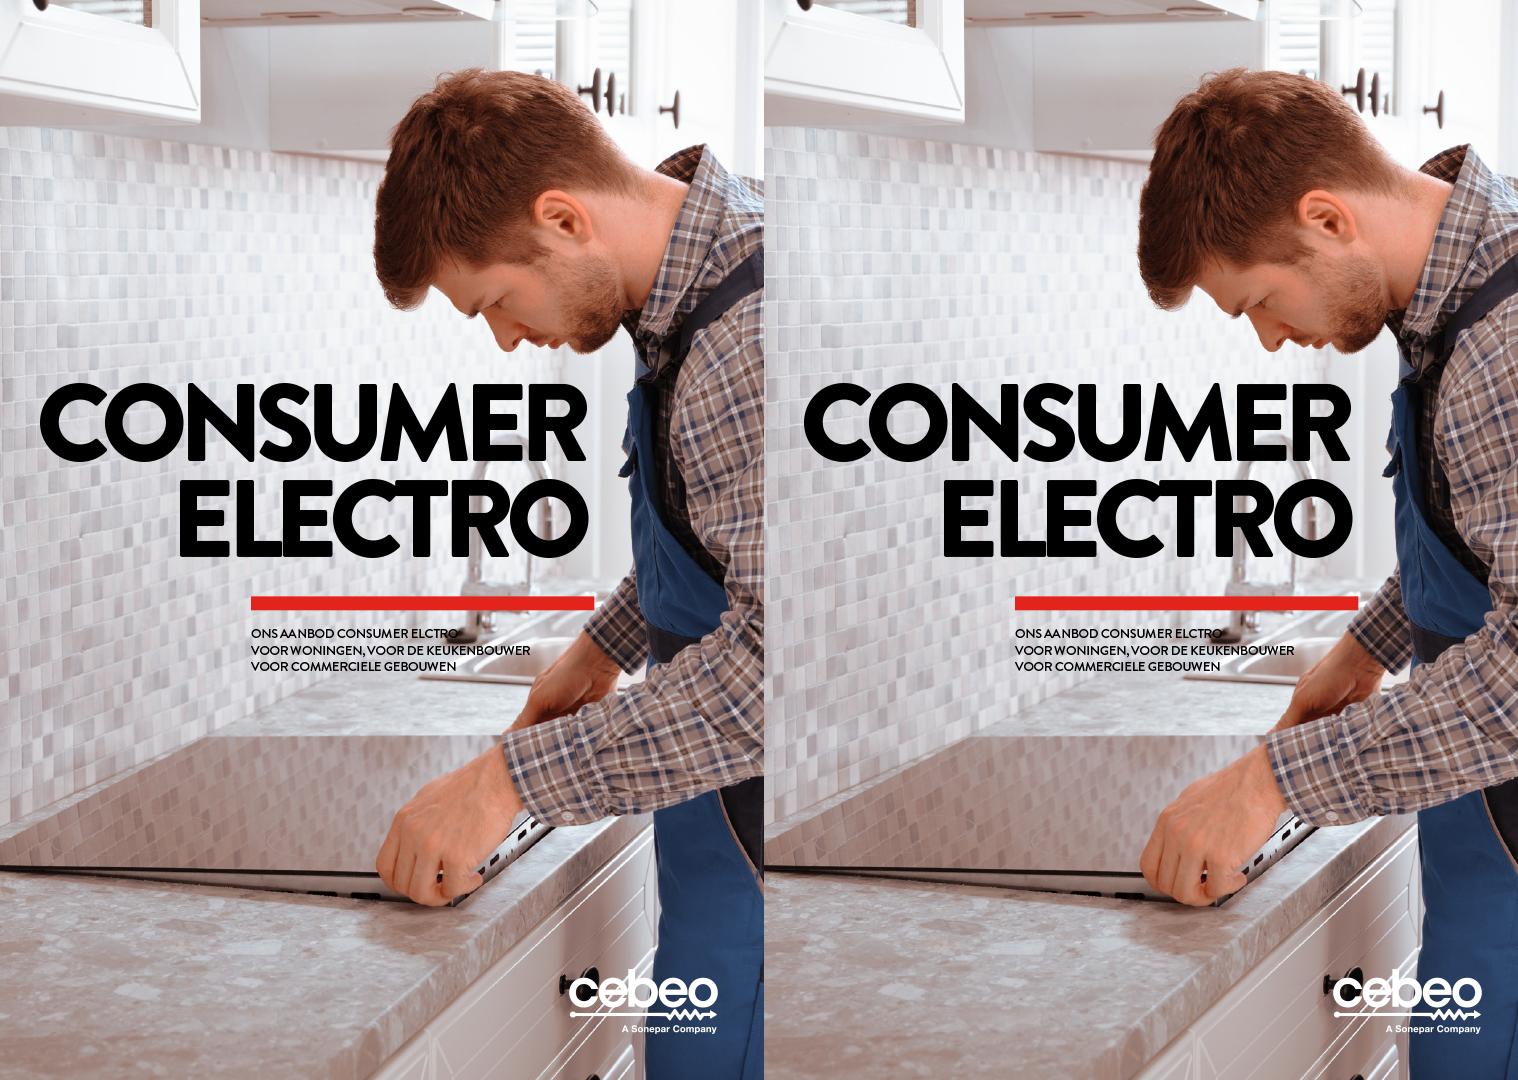 Consumer Electro: des cuisinistes